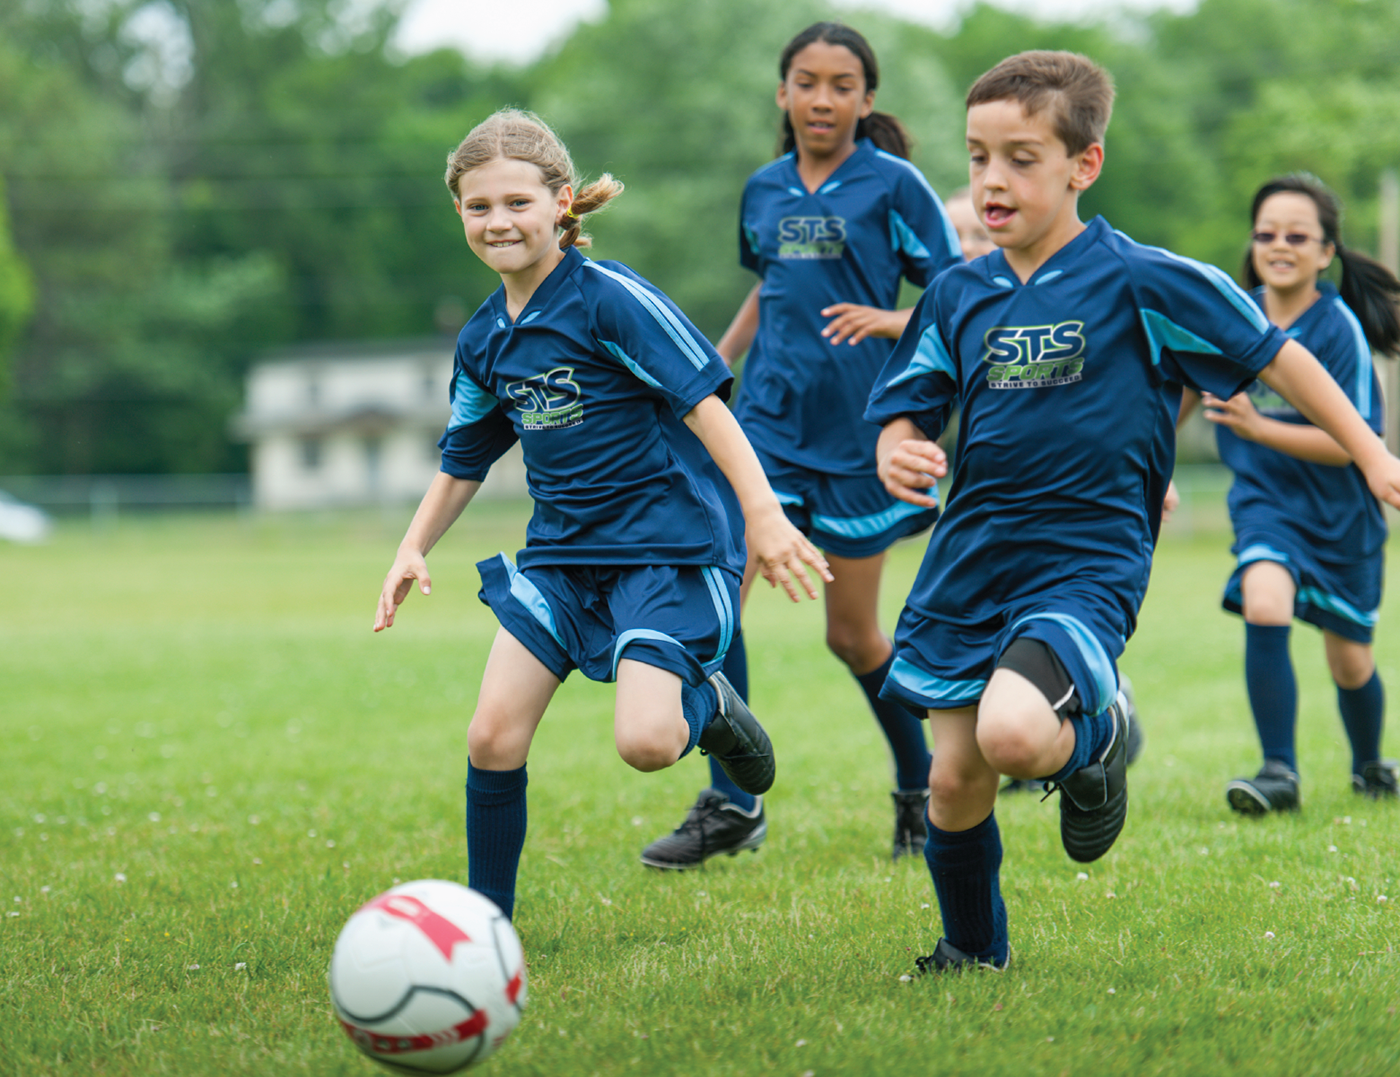 How to play sports. Футбол дети. Дети играющие в футбол. Дети футболисты. Спорт футбол дети.